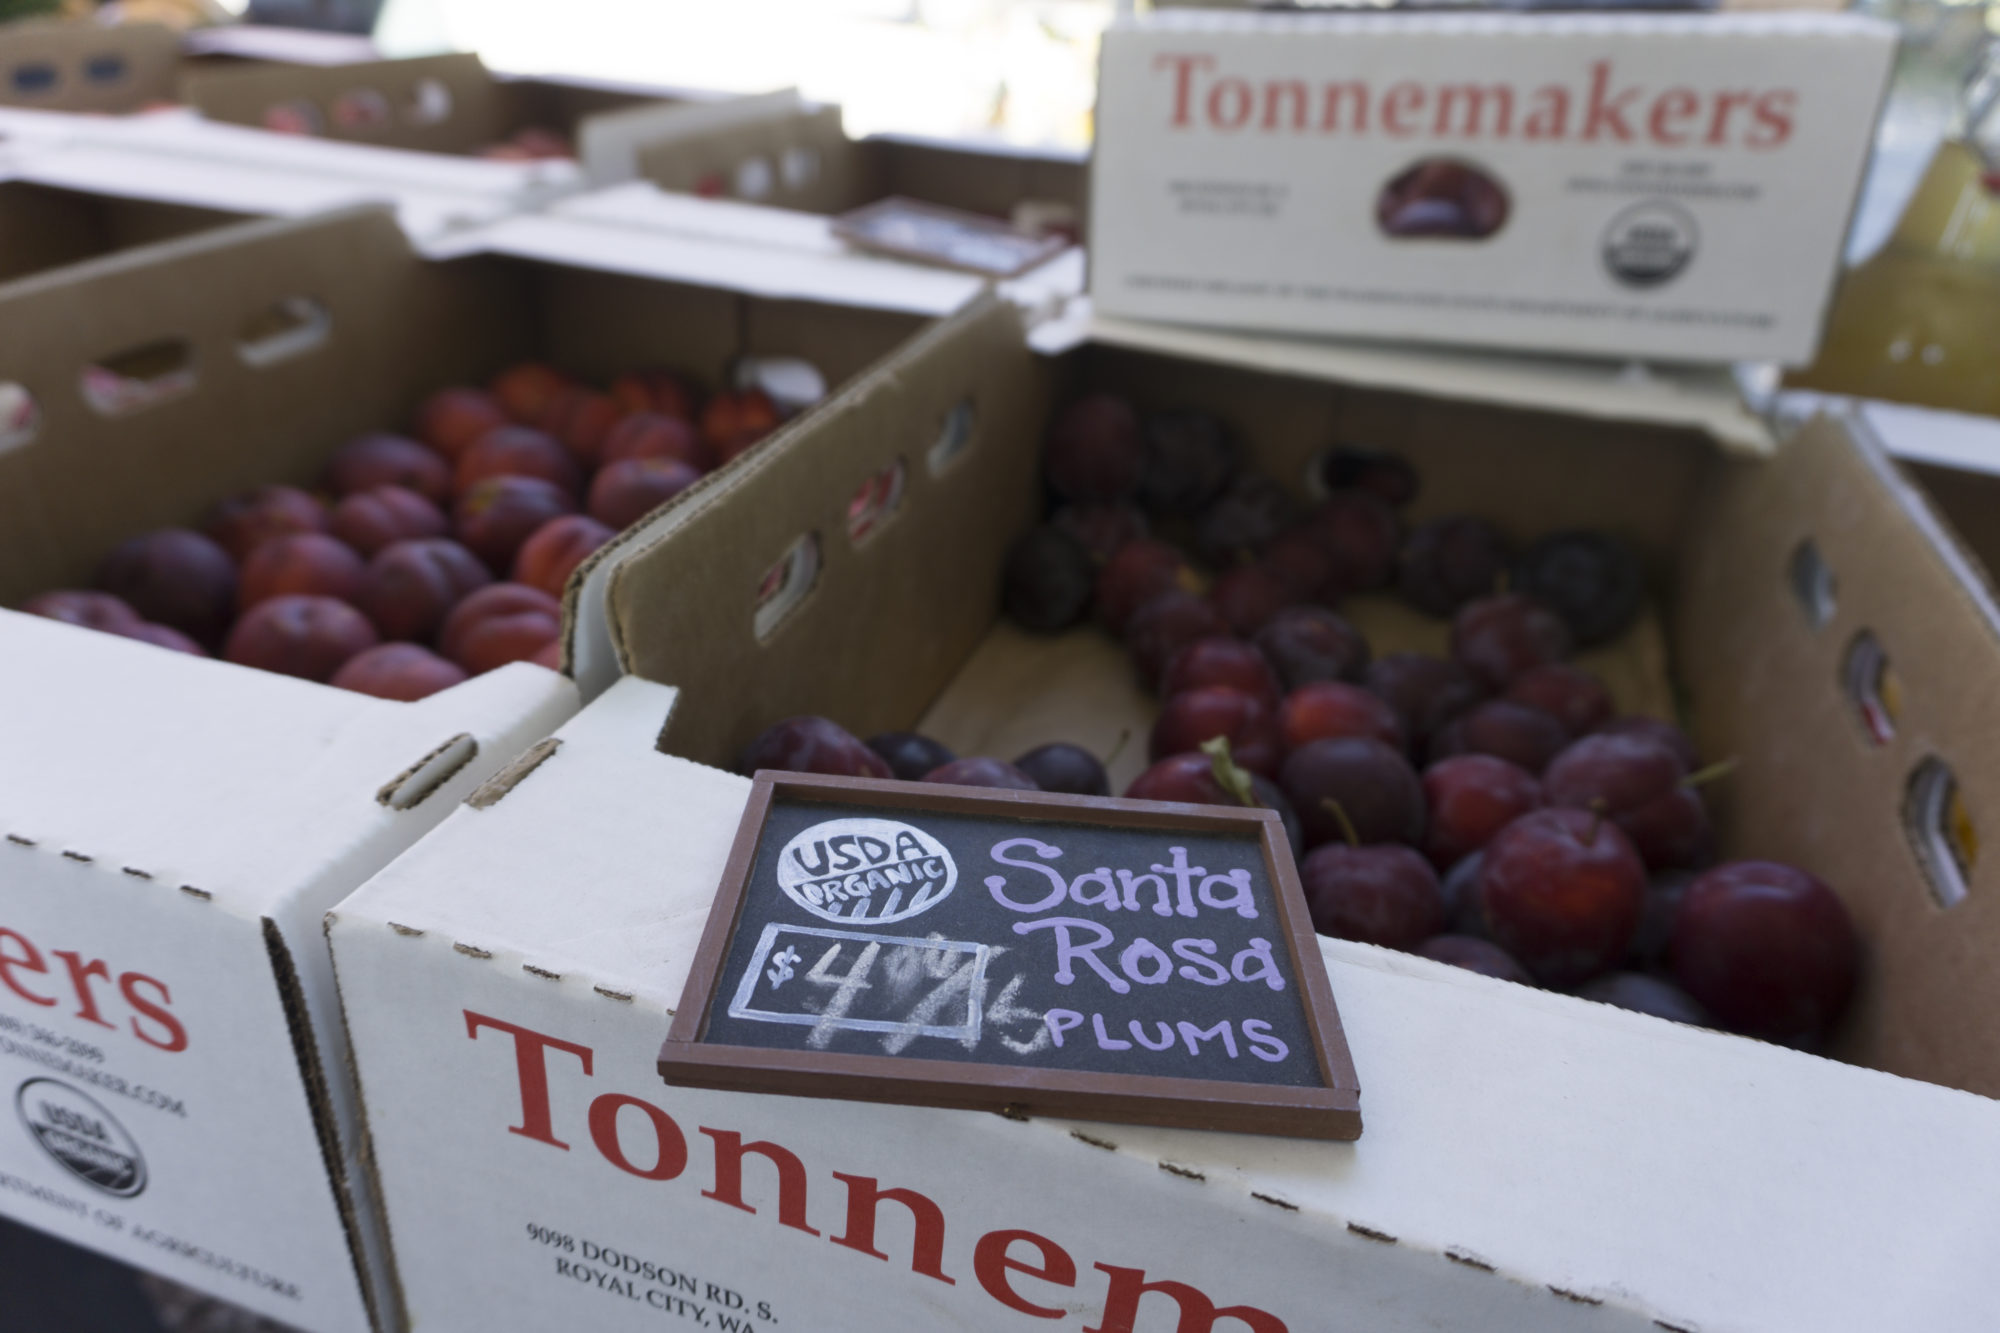 Locally grown cherries sold at Tonnemaker's Farm Stand in Washington. Photo credit: Reana Kovalcik